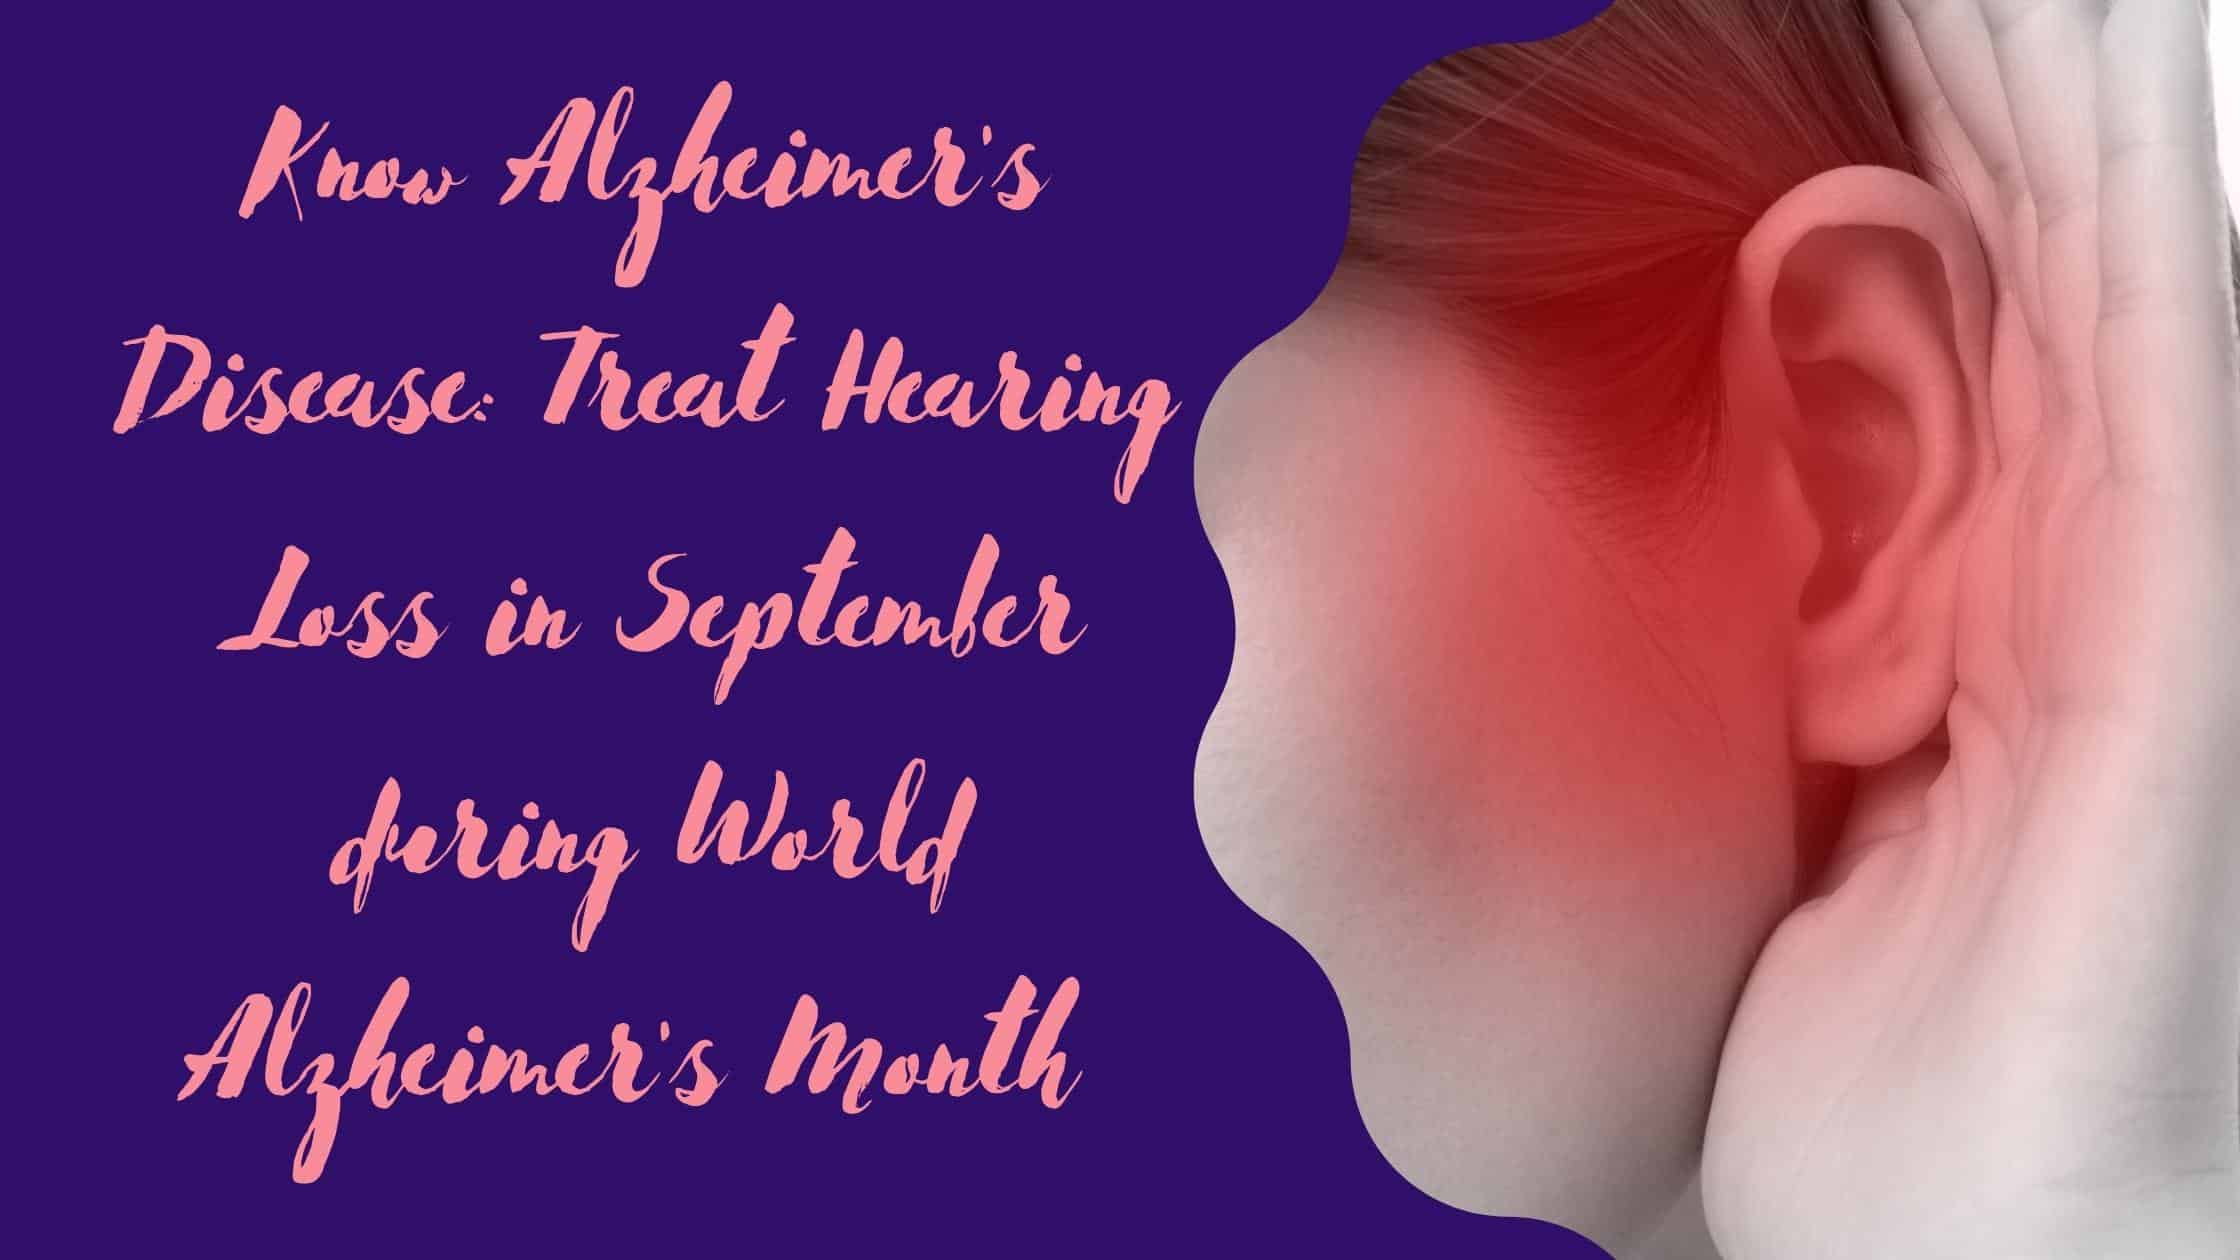 Know Alzheimer's Disease Treat Hearing Loss in September during World Alzheimer's Month (1)